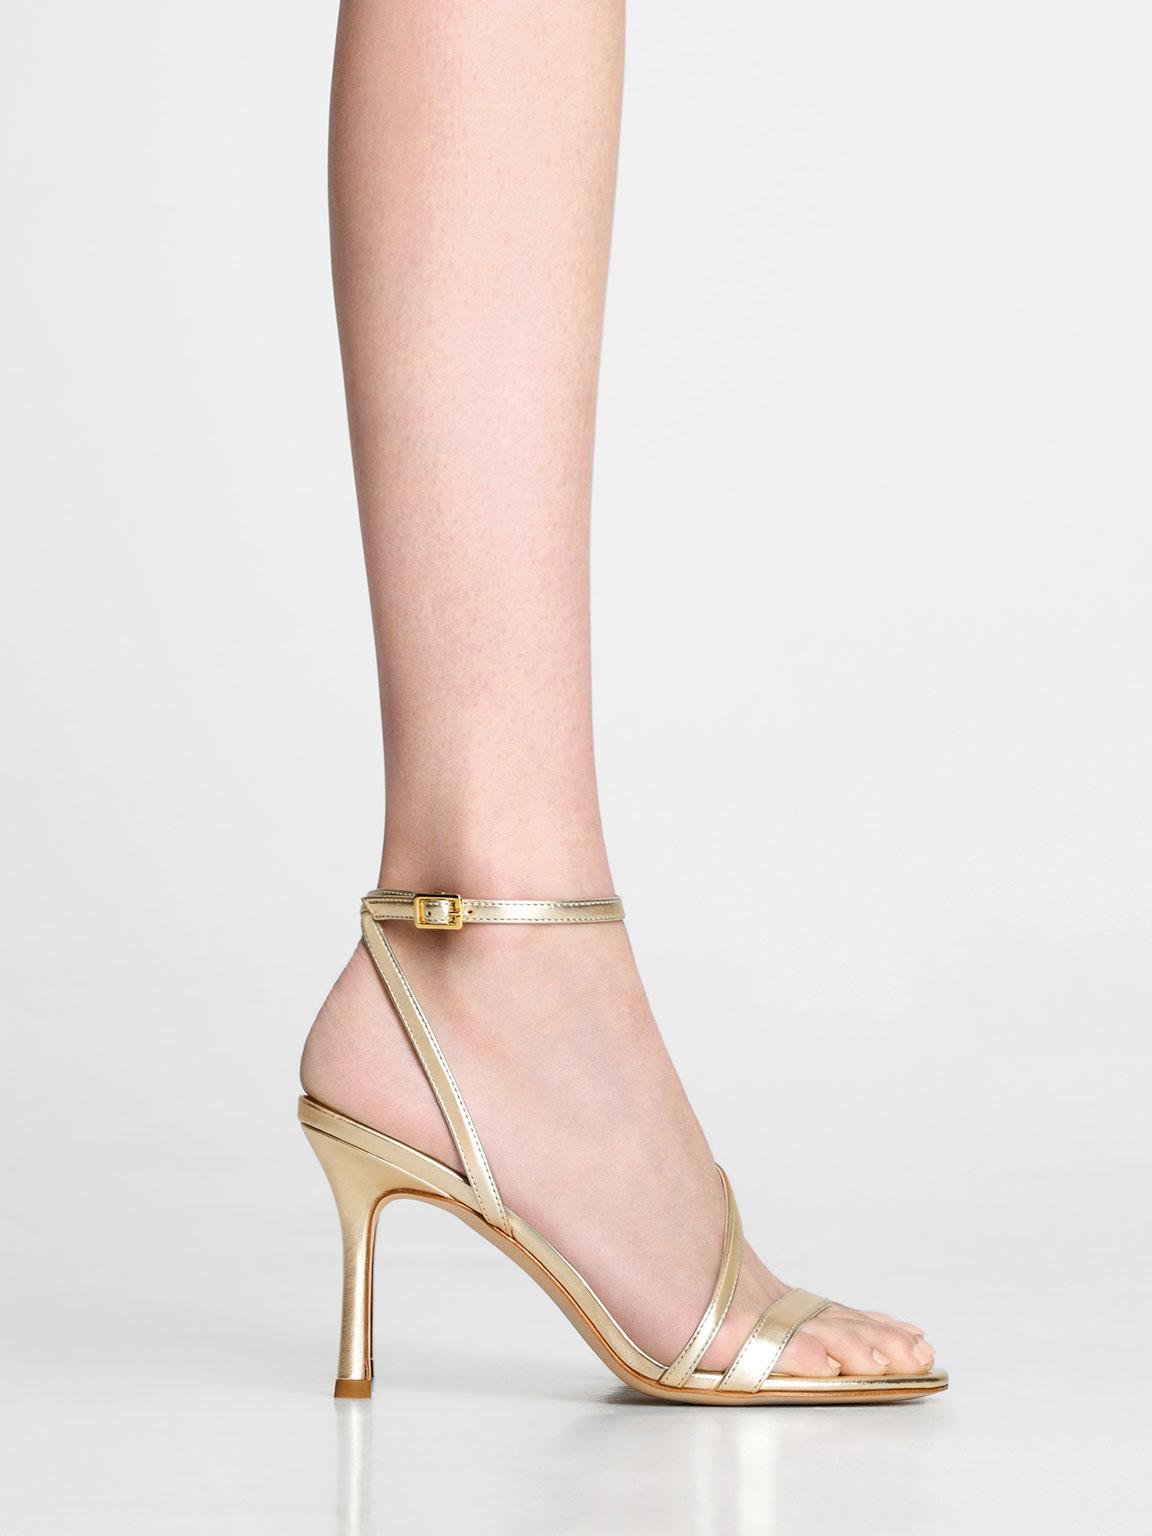 charles and keith heels